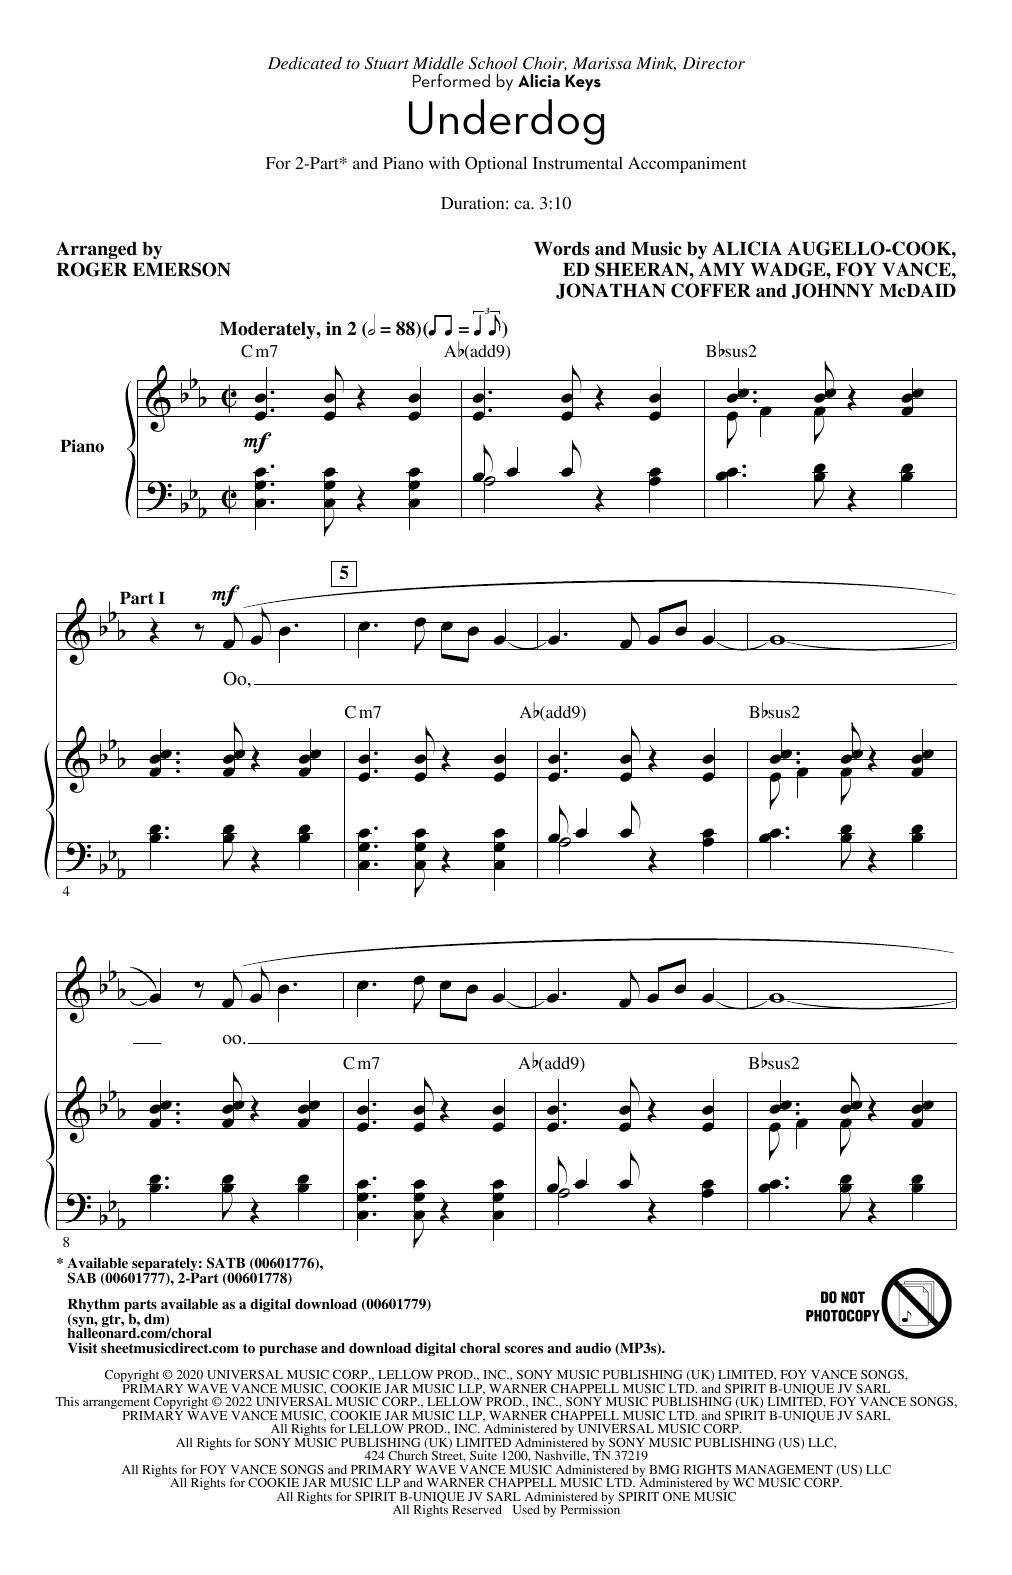 Alicia Keys Underdog (arr. Roger Emerson) Sheet Music Notes & Chords for SAB Choir - Download or Print PDF